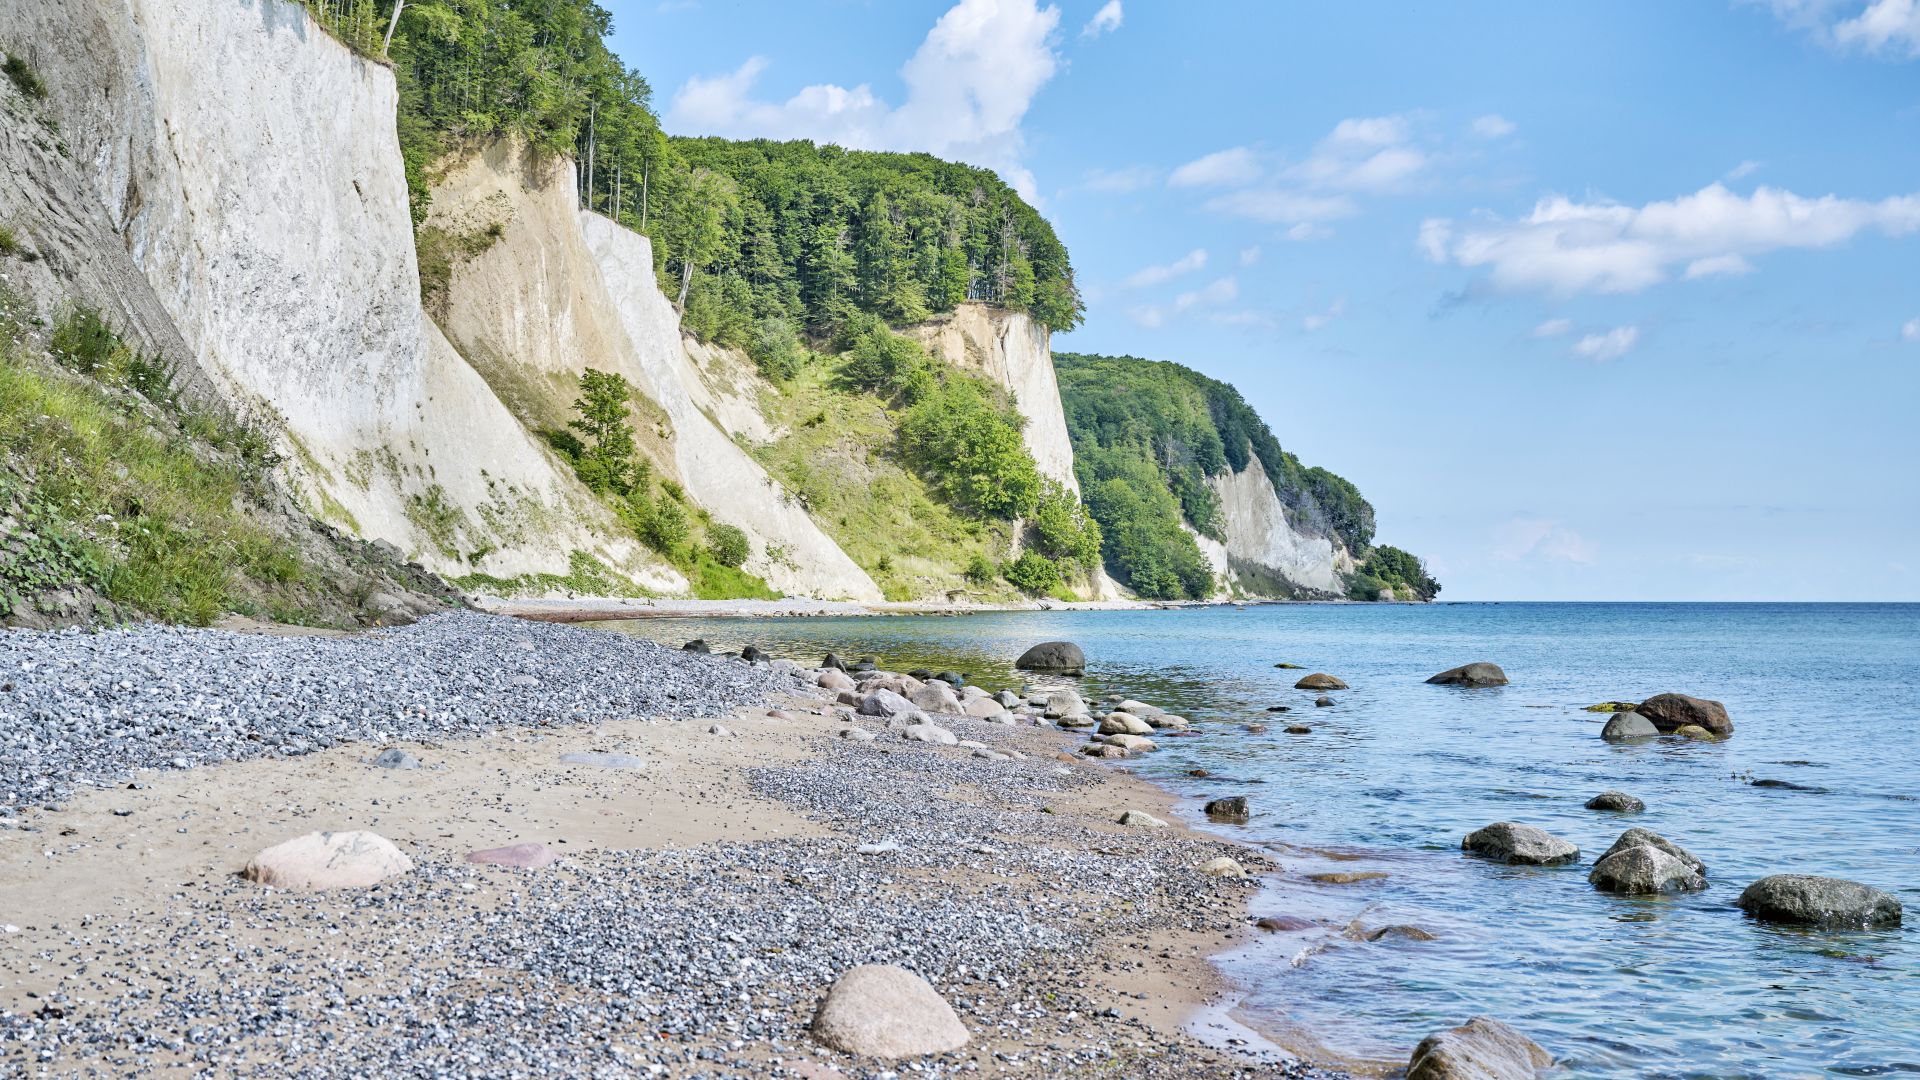 Sassnitz: cliffs with a view of the chalk cliffs